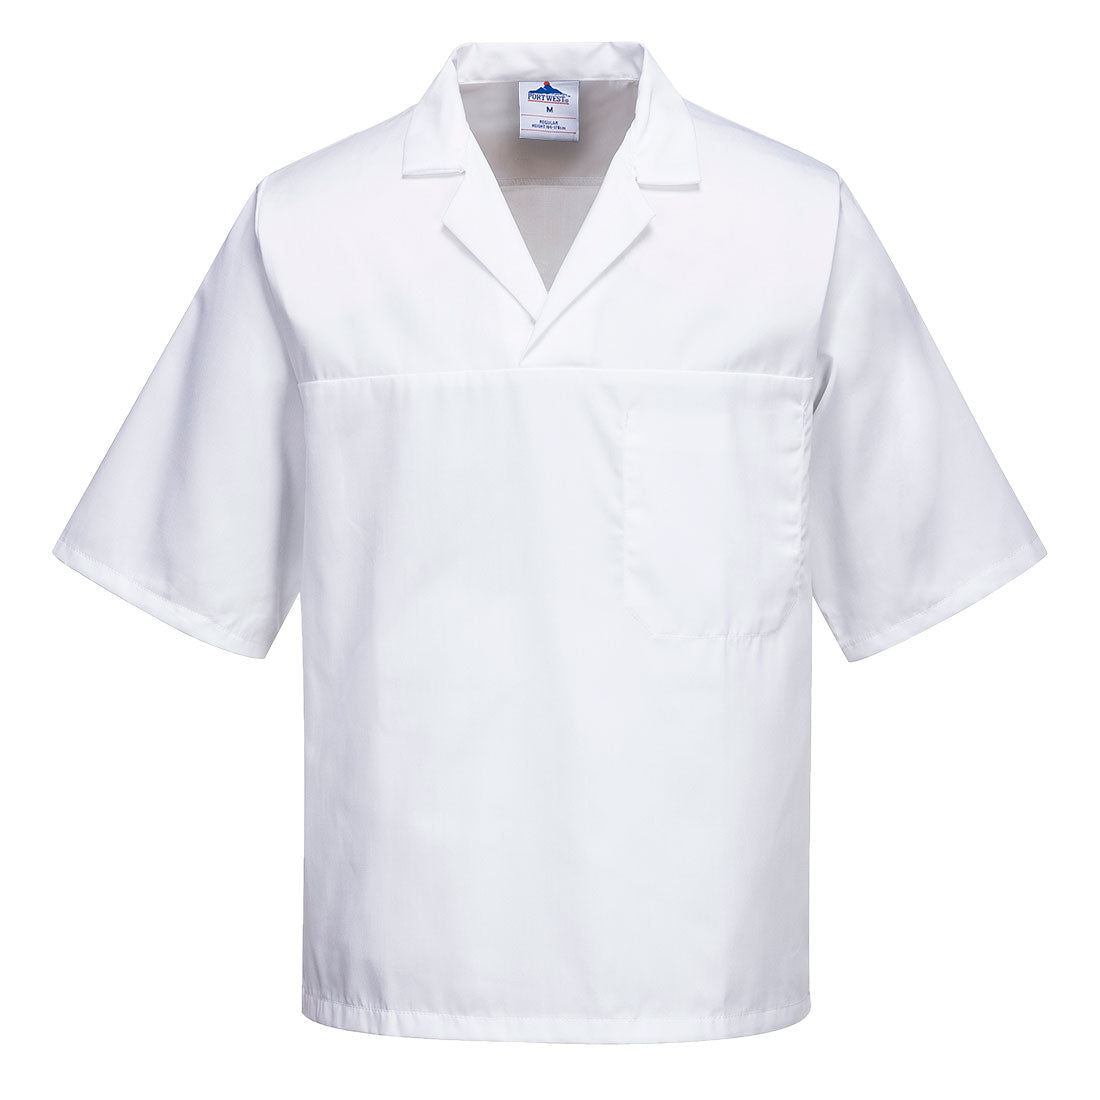 Portwest 2209 - White Food Industry Short Sleeve Baker Shirt sz Medium Regular